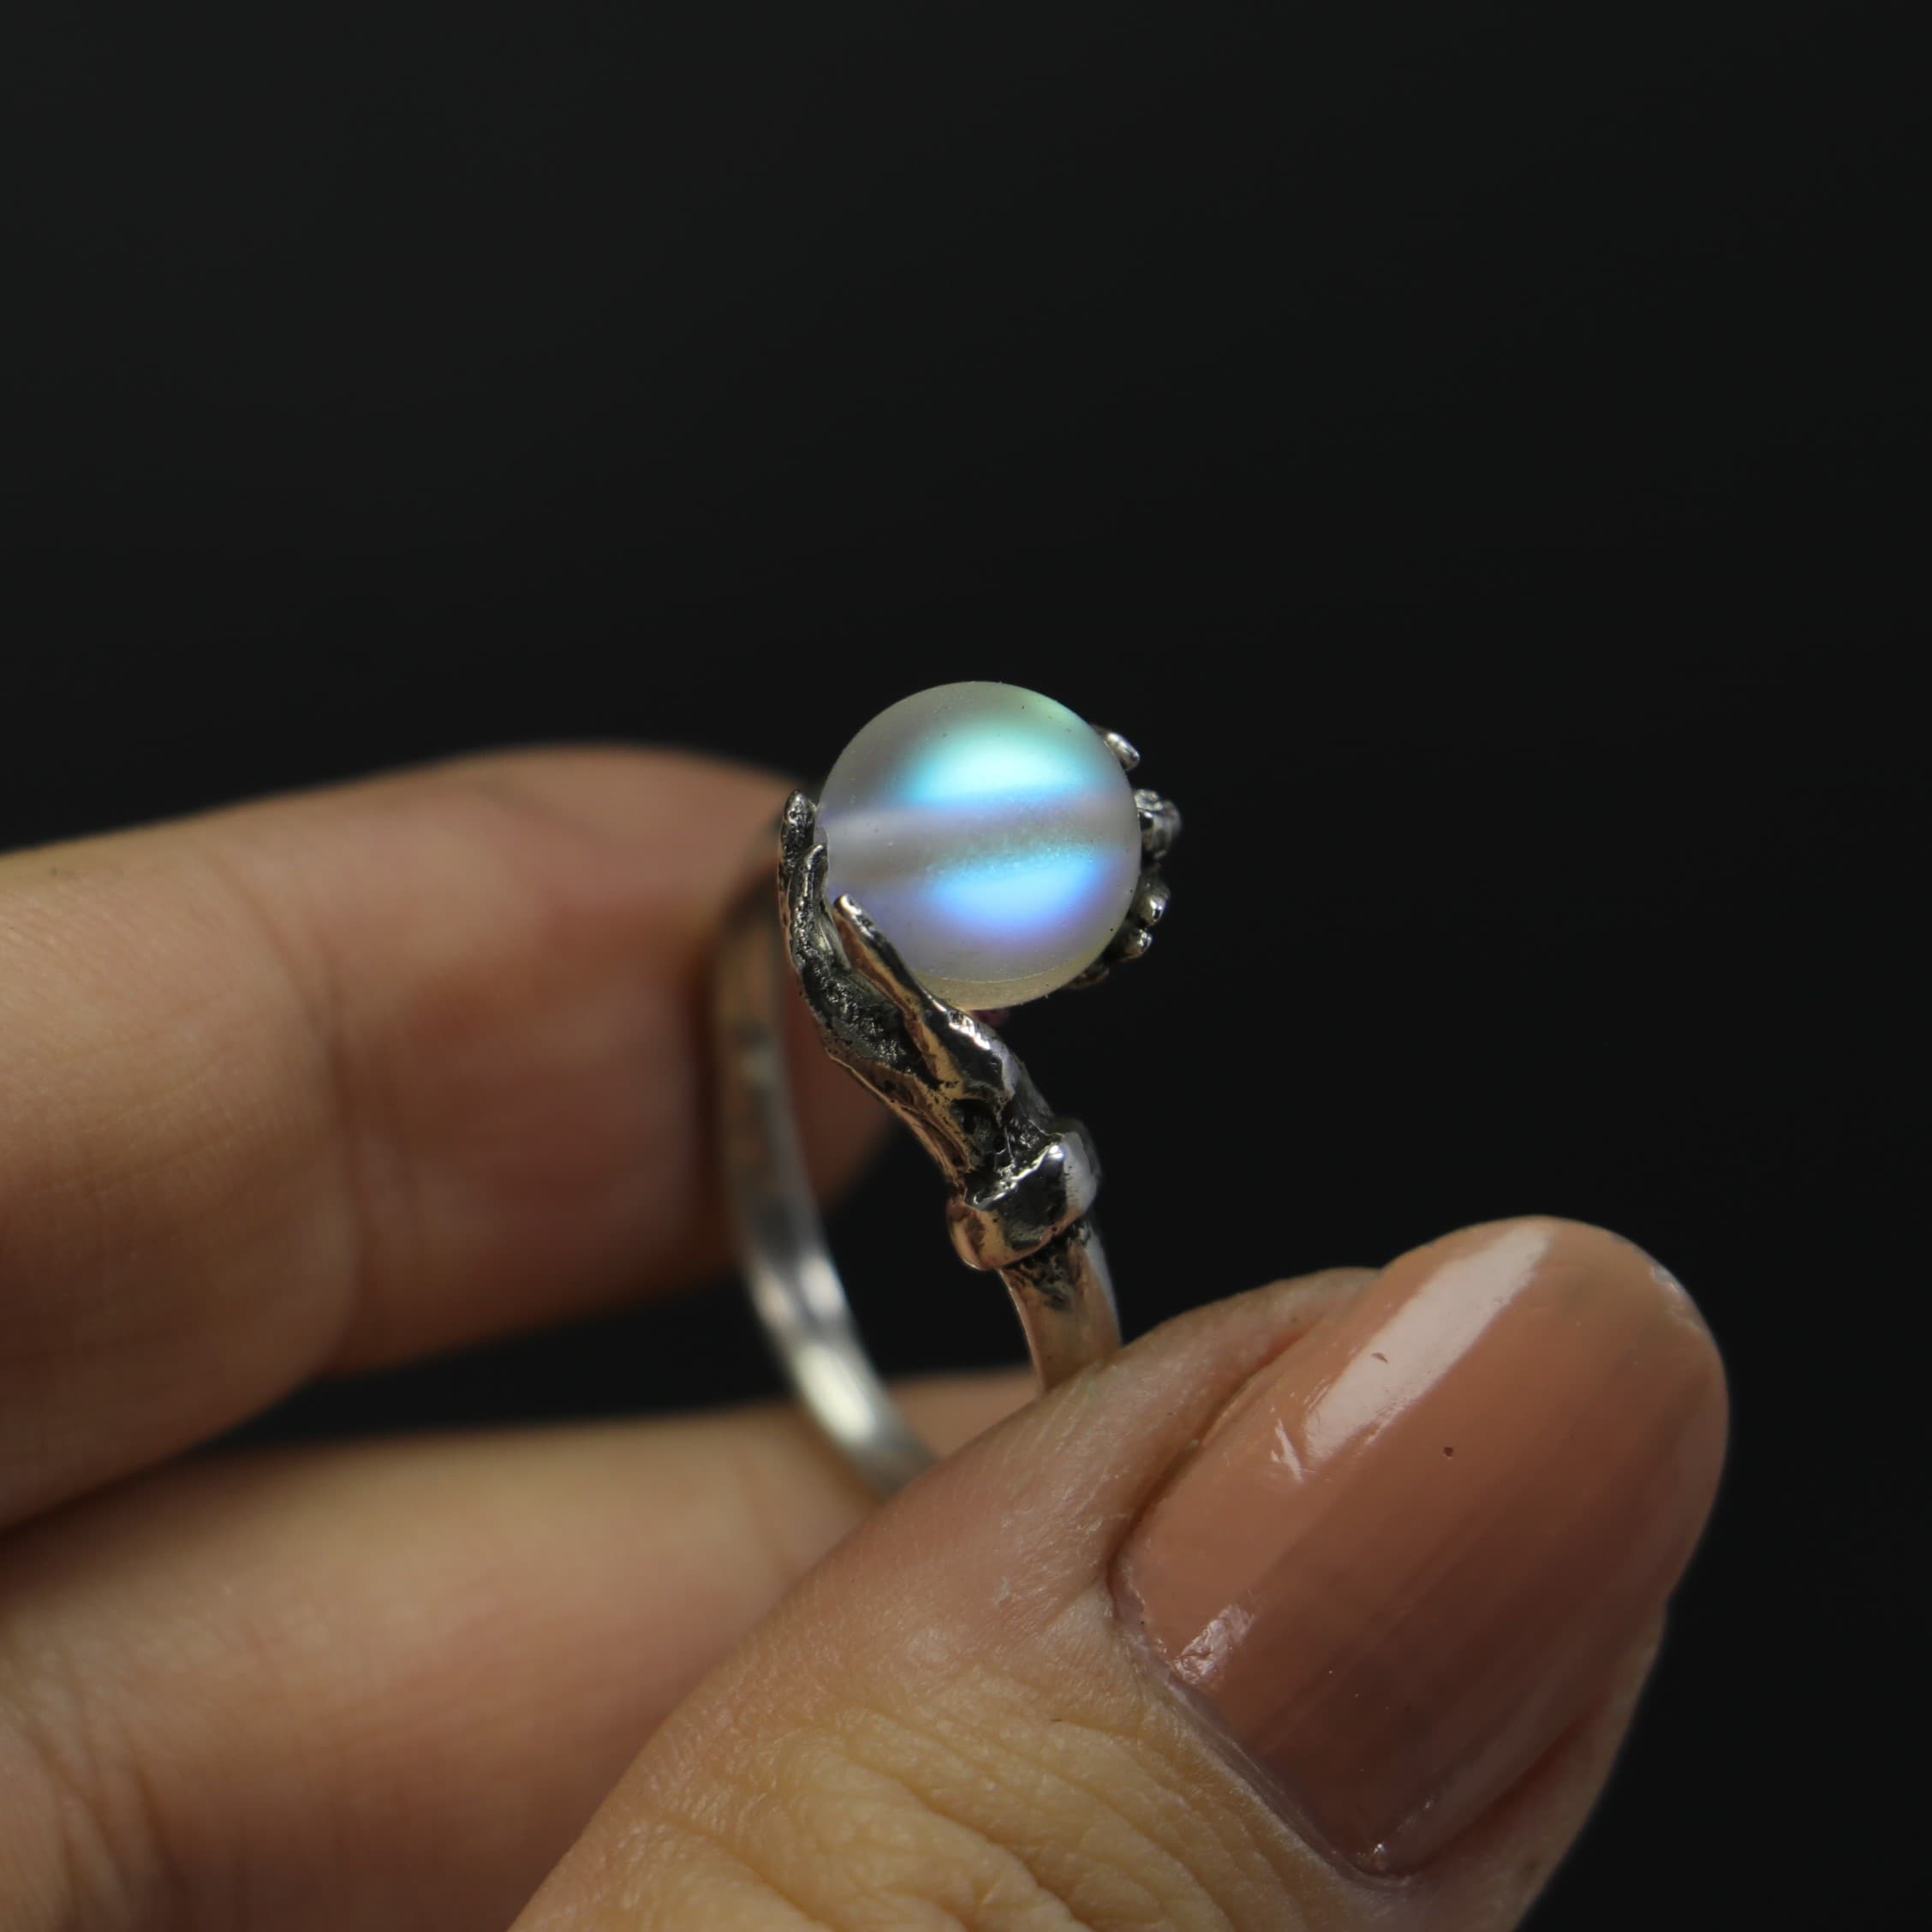 Secrets of the Universe Aqua Zircon 925 Sterling Silver Ring